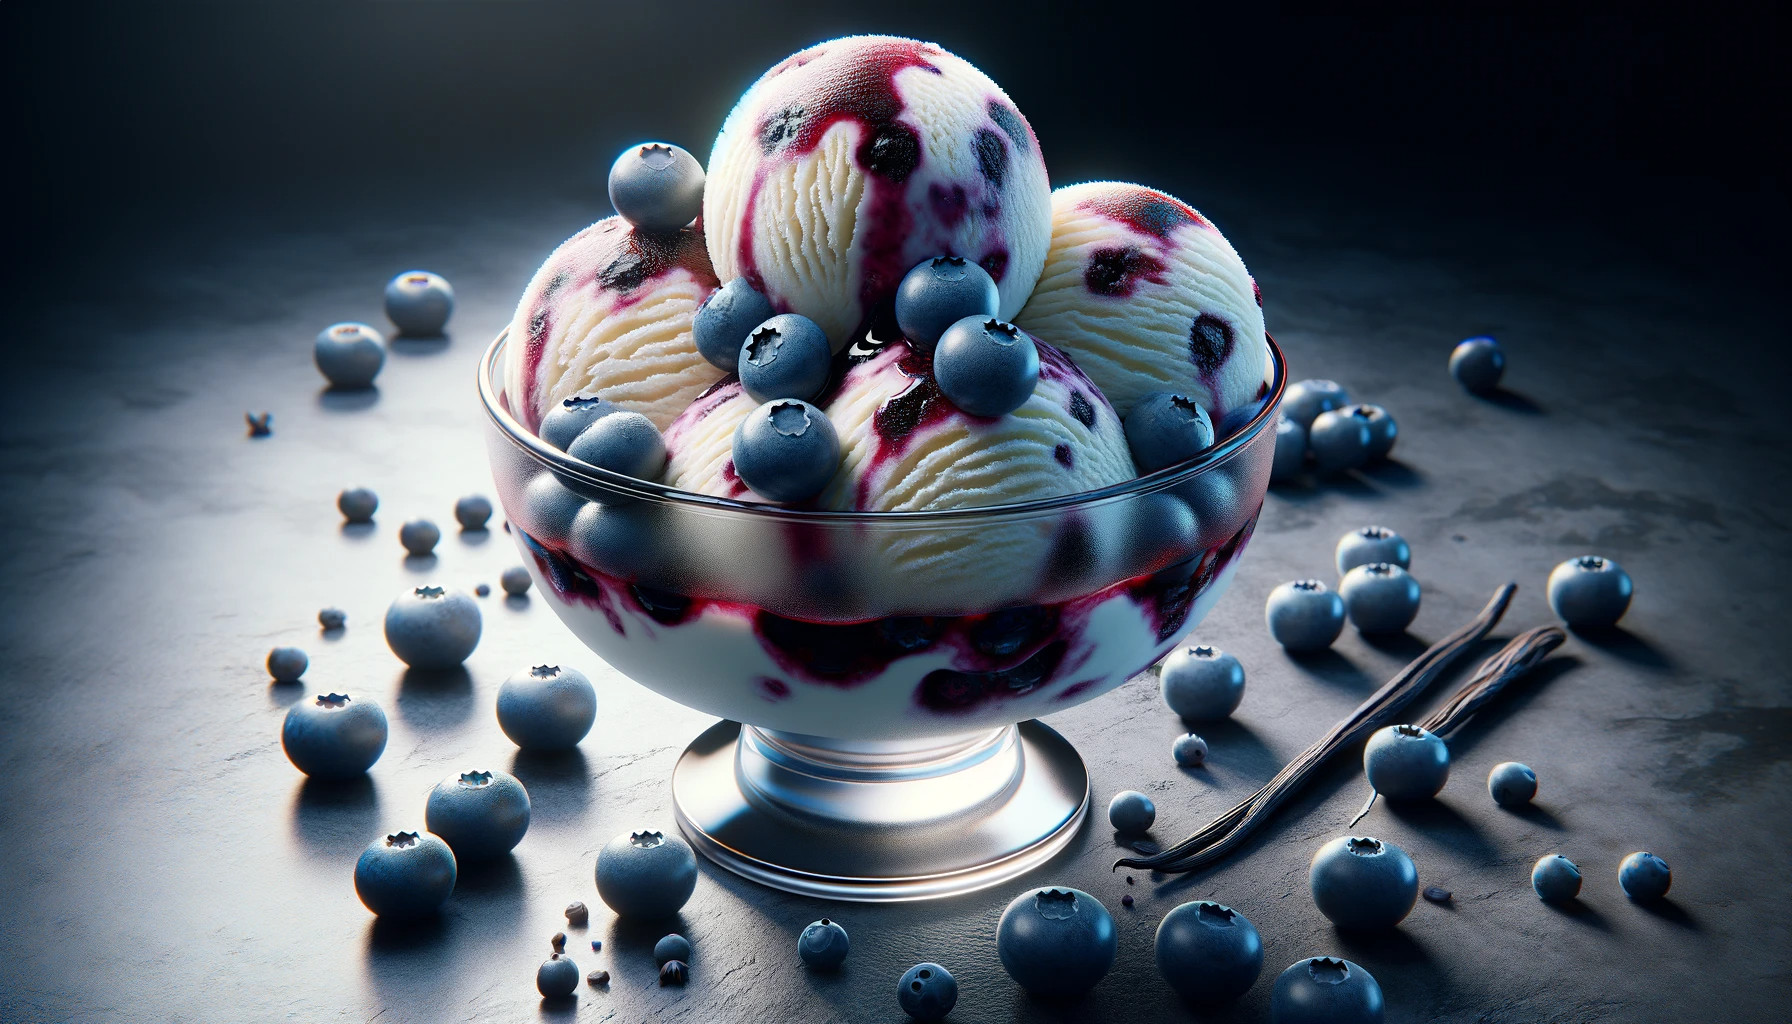 Blueberry vanilla ice cream, served in a delicate glass dish